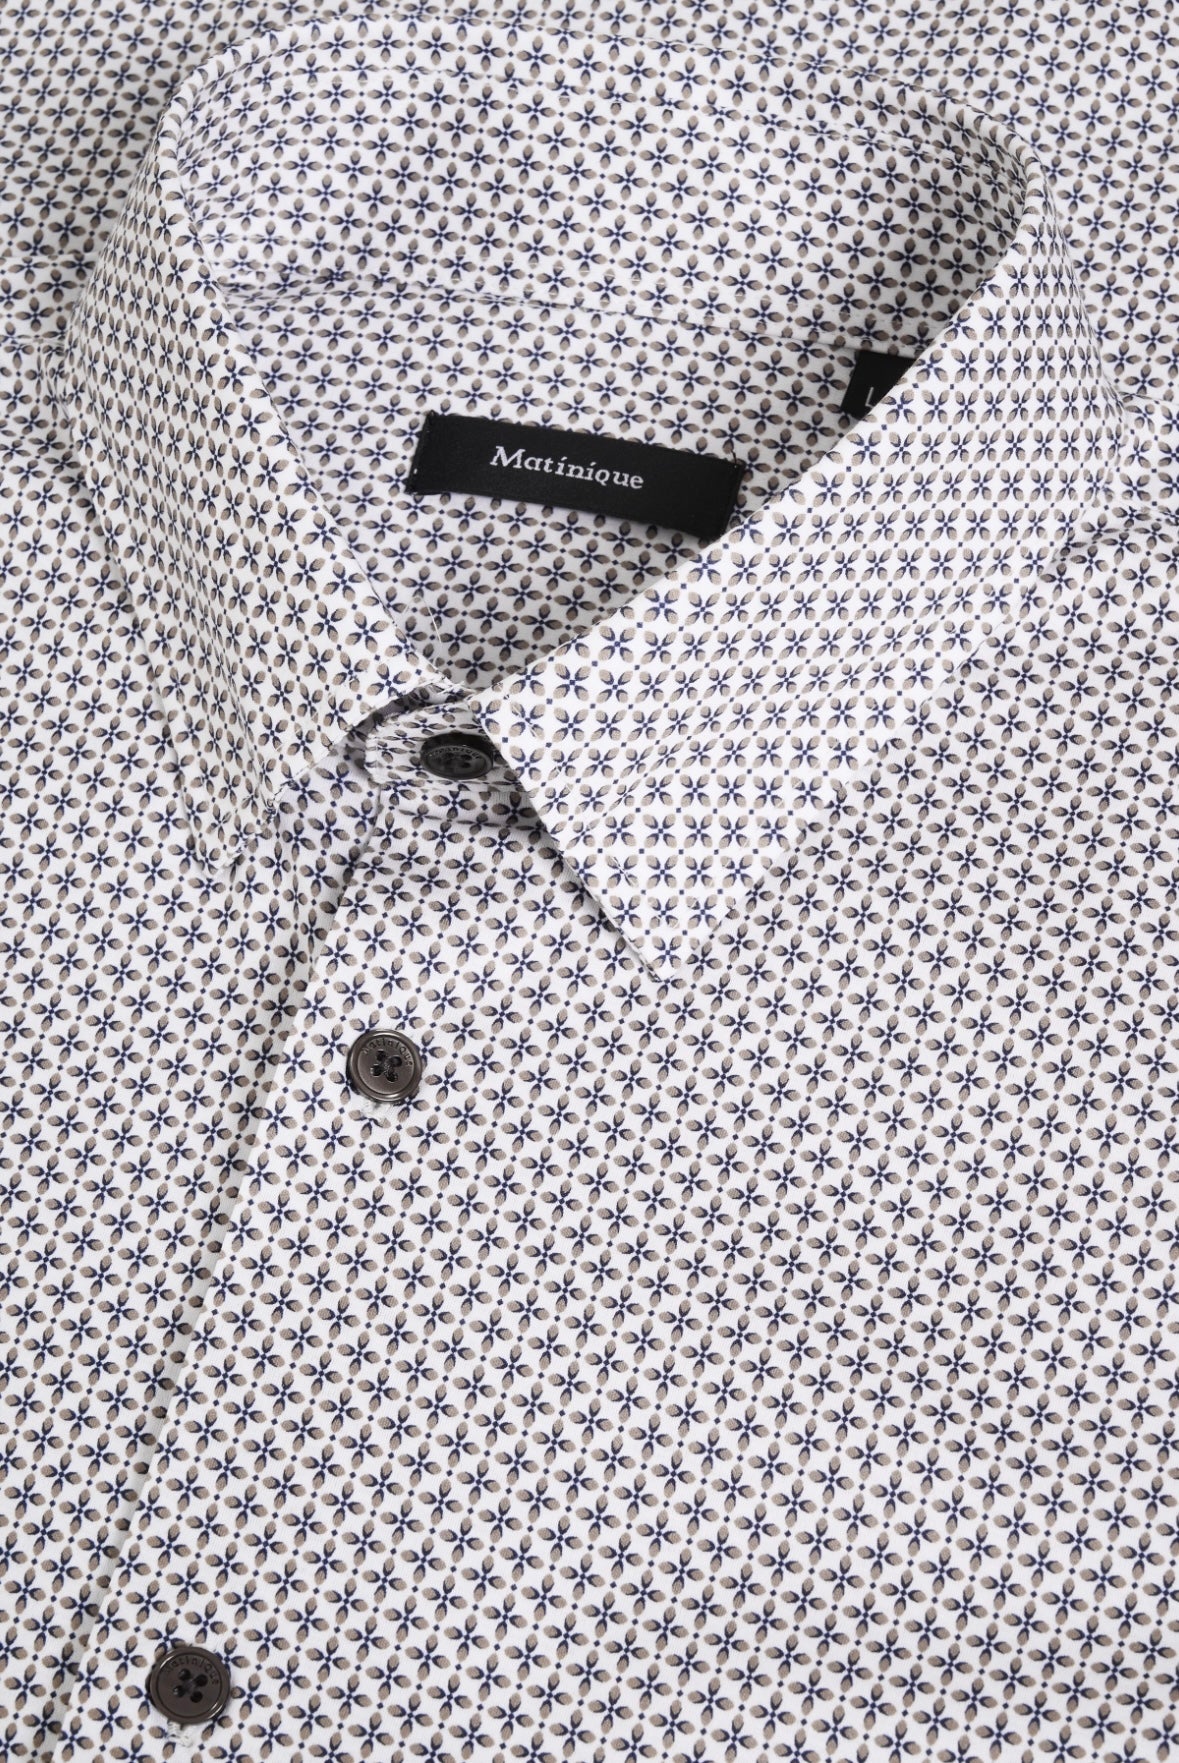 Matinique Trestol shirt - Oyster Gray